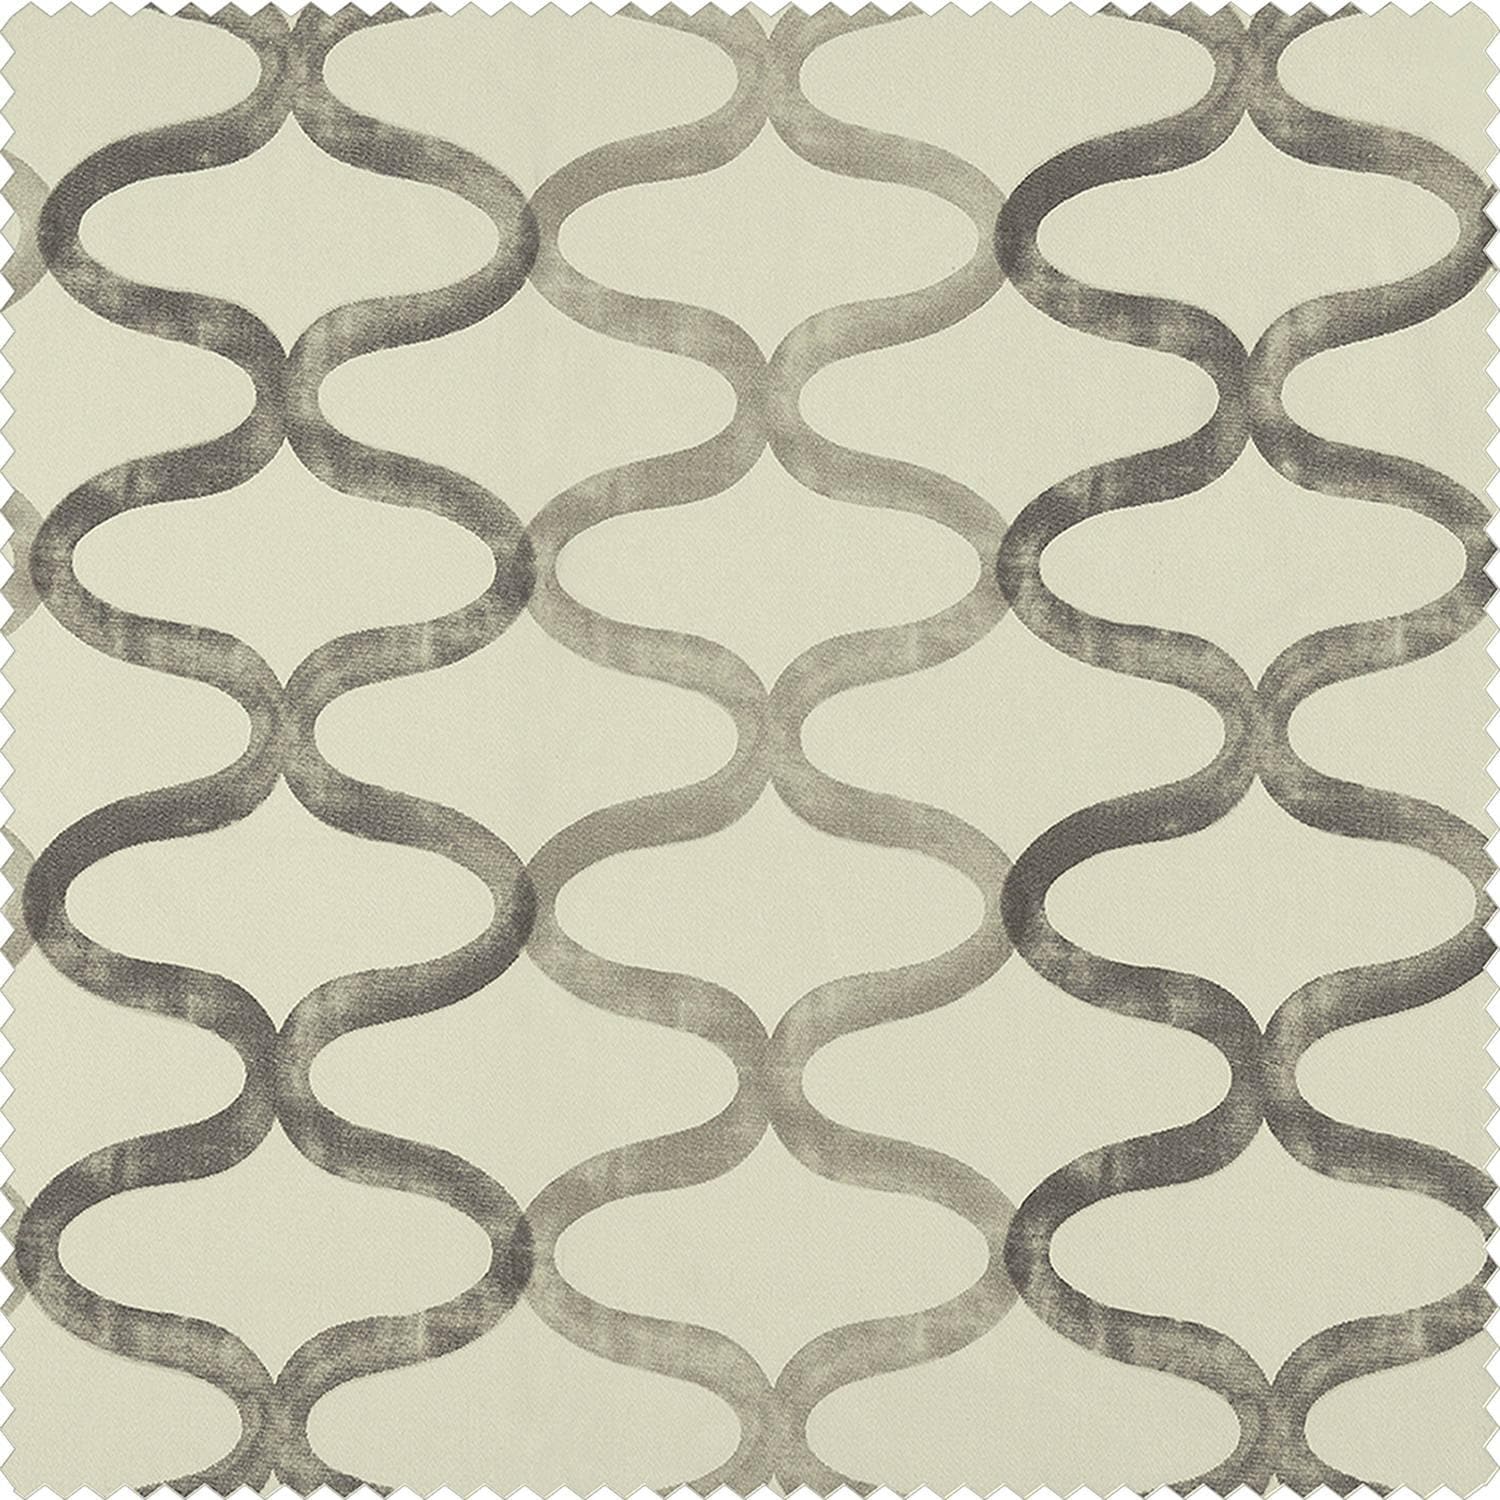 Illusions Silver Grey Geometric Printed Cotton Tie-Up Window Shade